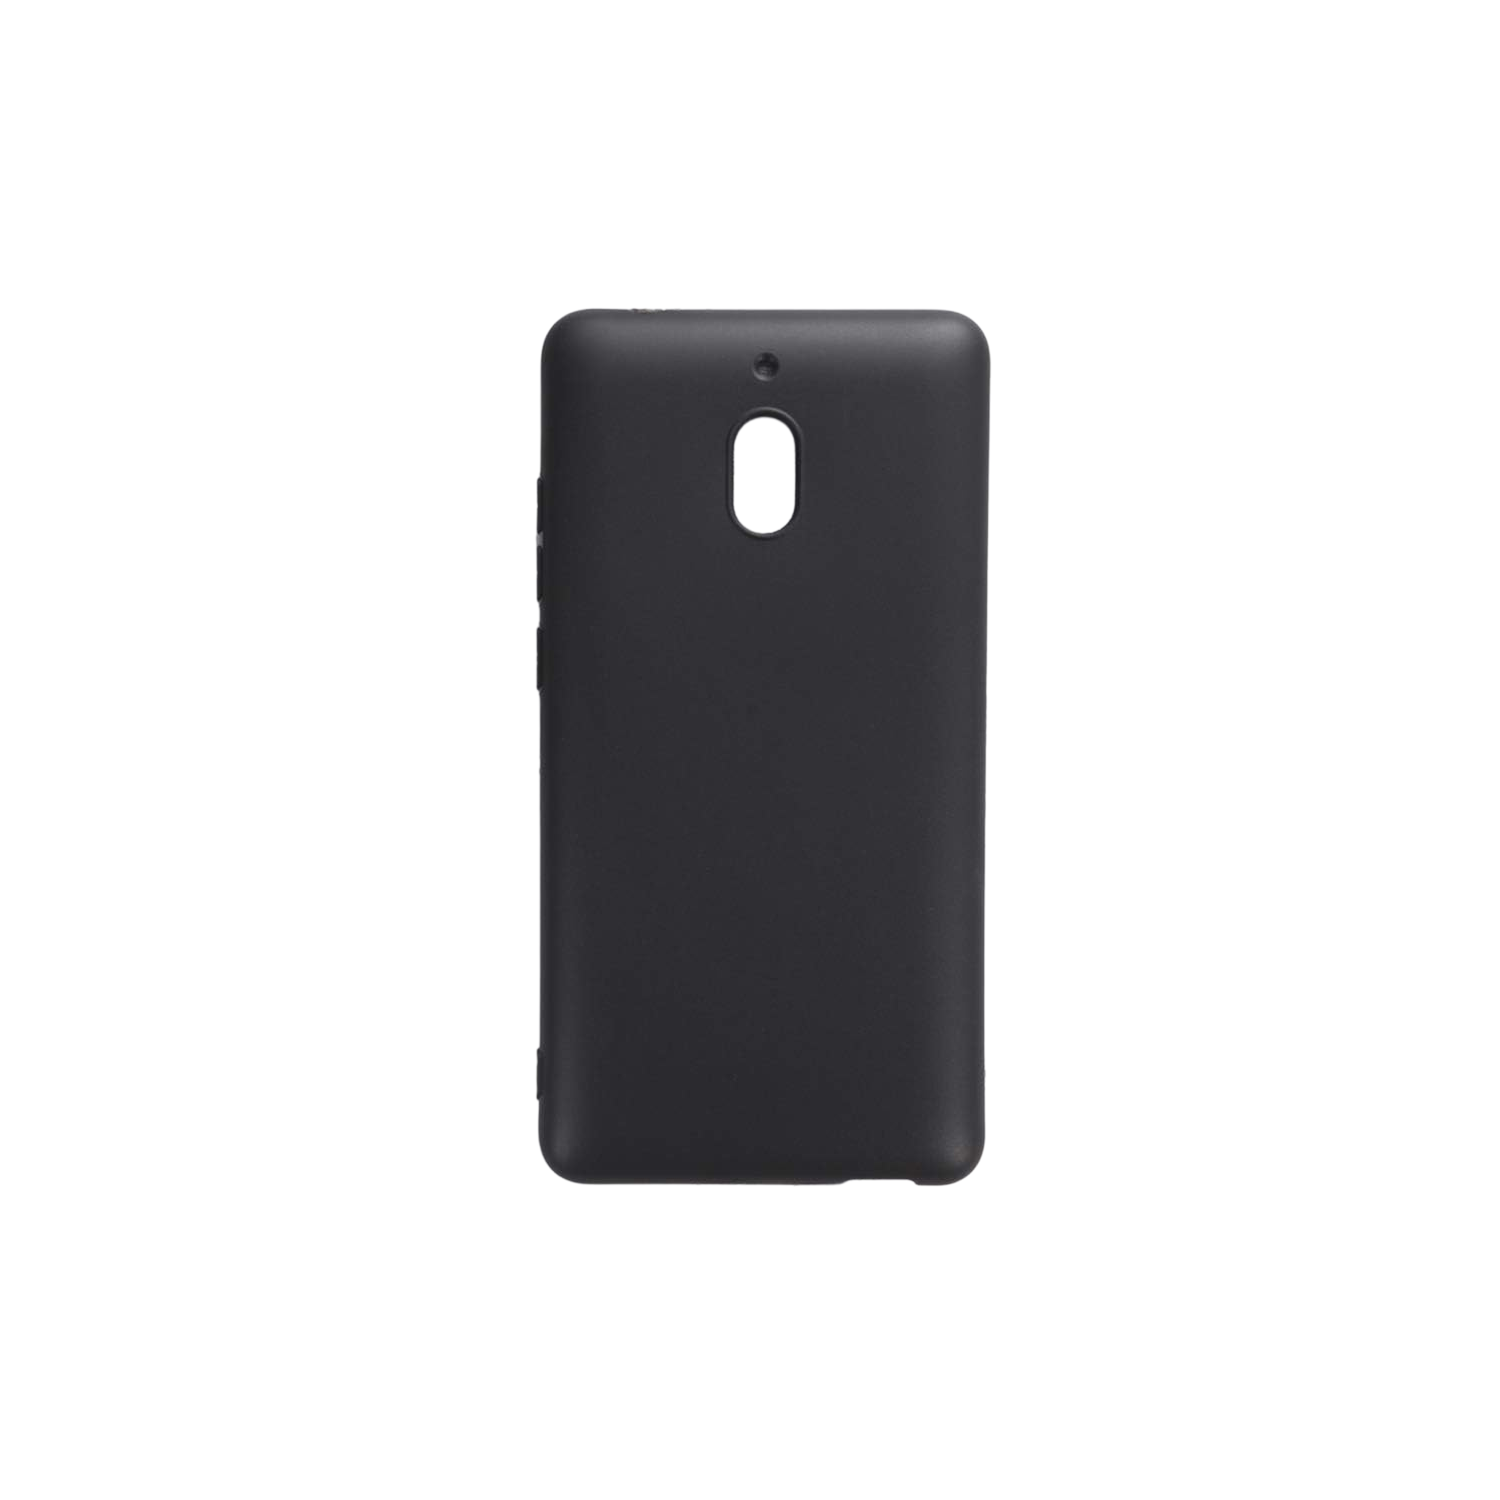 【CSmart】Ultra Thin Soft TPU Silicone Jelly Bumper Back Cover Case for Nokia 2.1 2018, Black